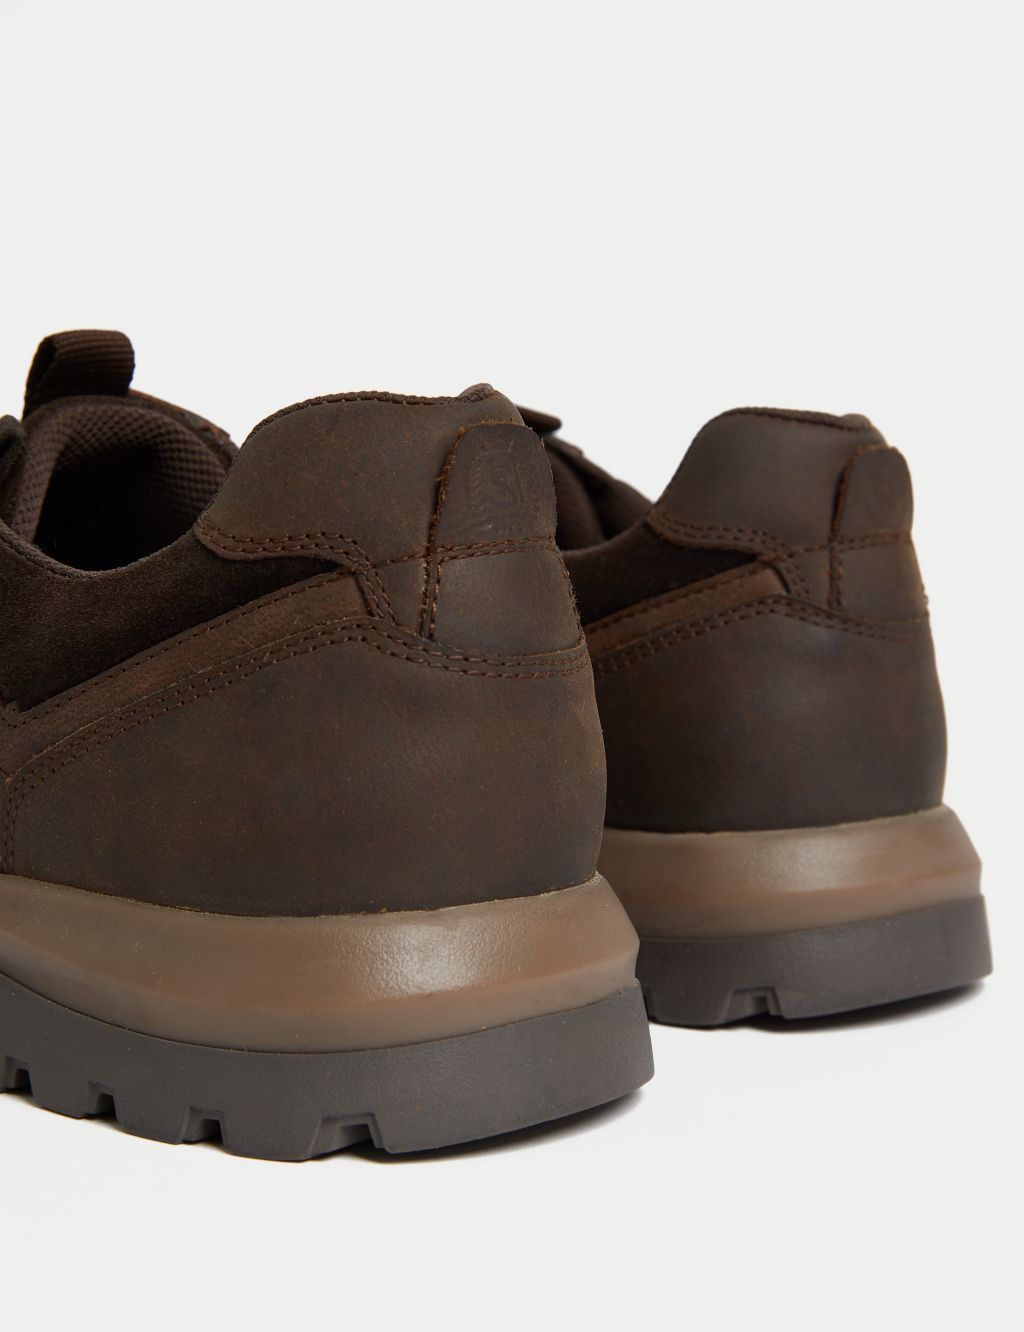 Showerproof Leather Walking Shoes image 3